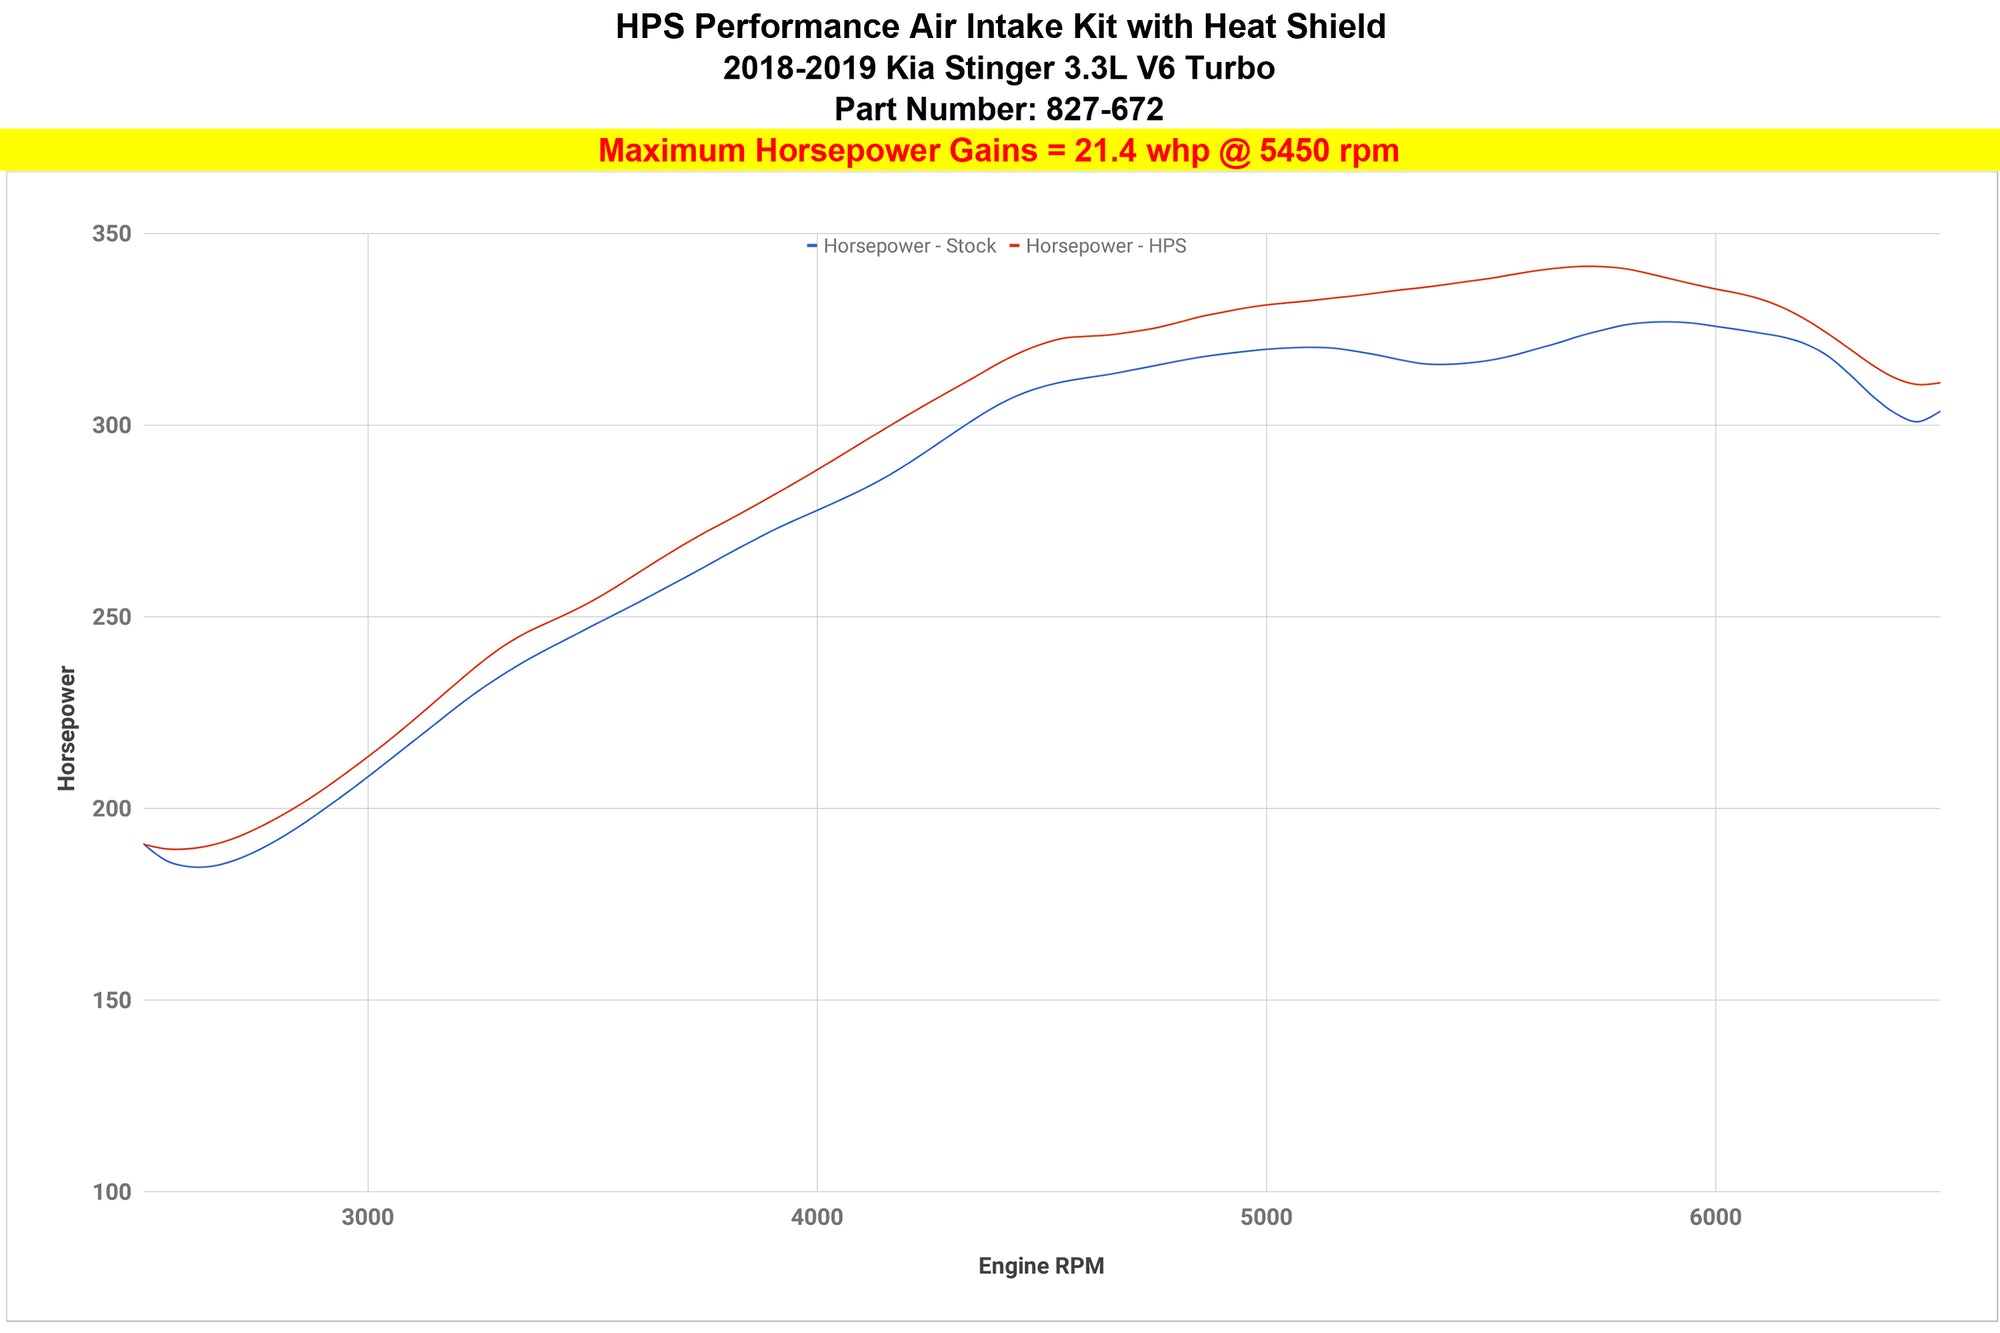 Dyno proven gains 21.4 whp HPS Performance Shortram Air Intake Kit 2018-2019 Kia Stinger 3.3L V6 Twin Turbo 827-672R